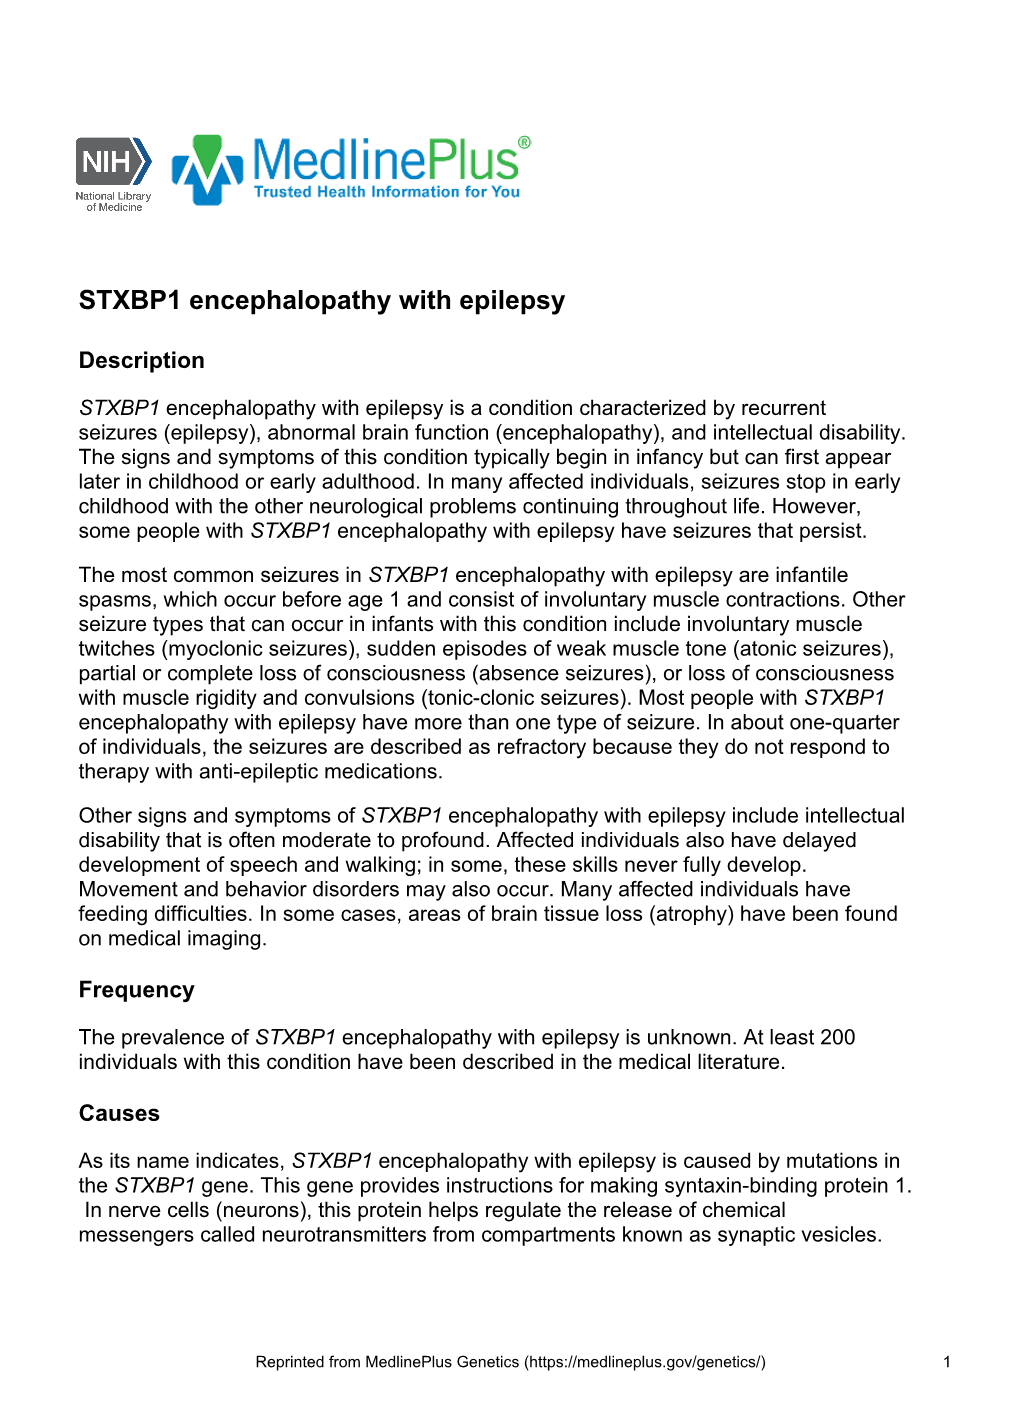 STXBP1 Encephalopathy with Epilepsy